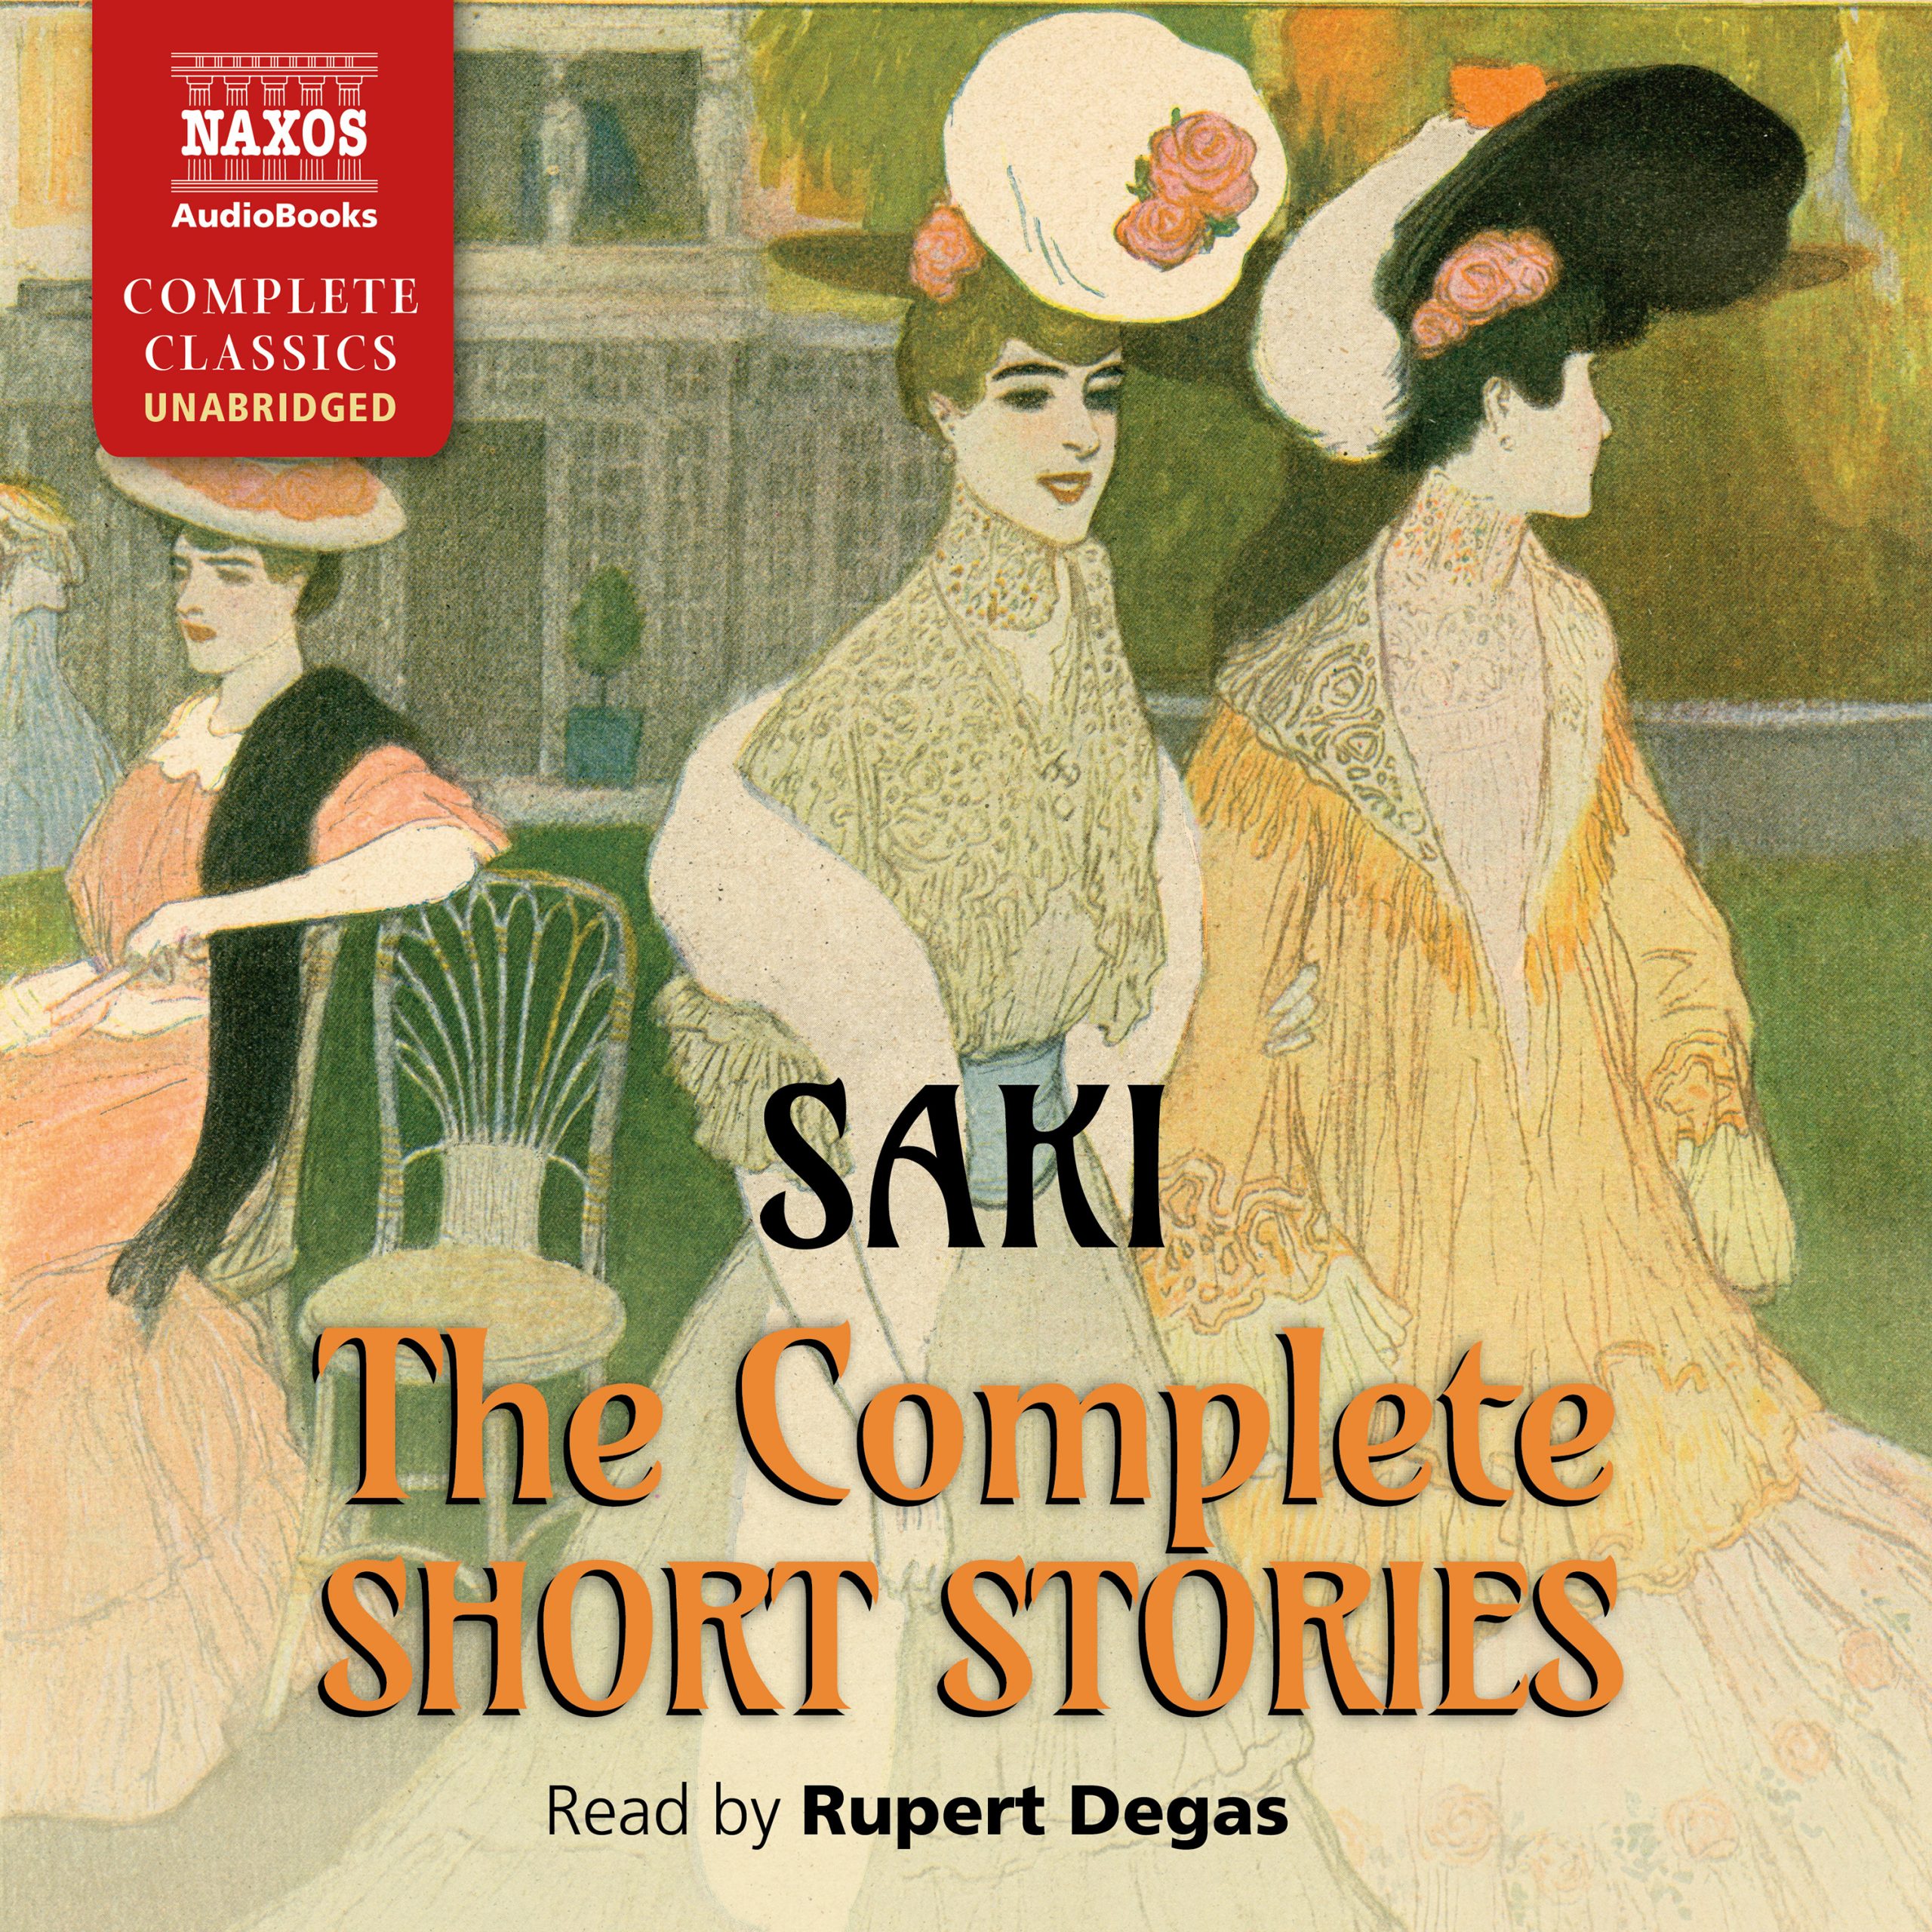 The Complete Short Stories (unabridged)